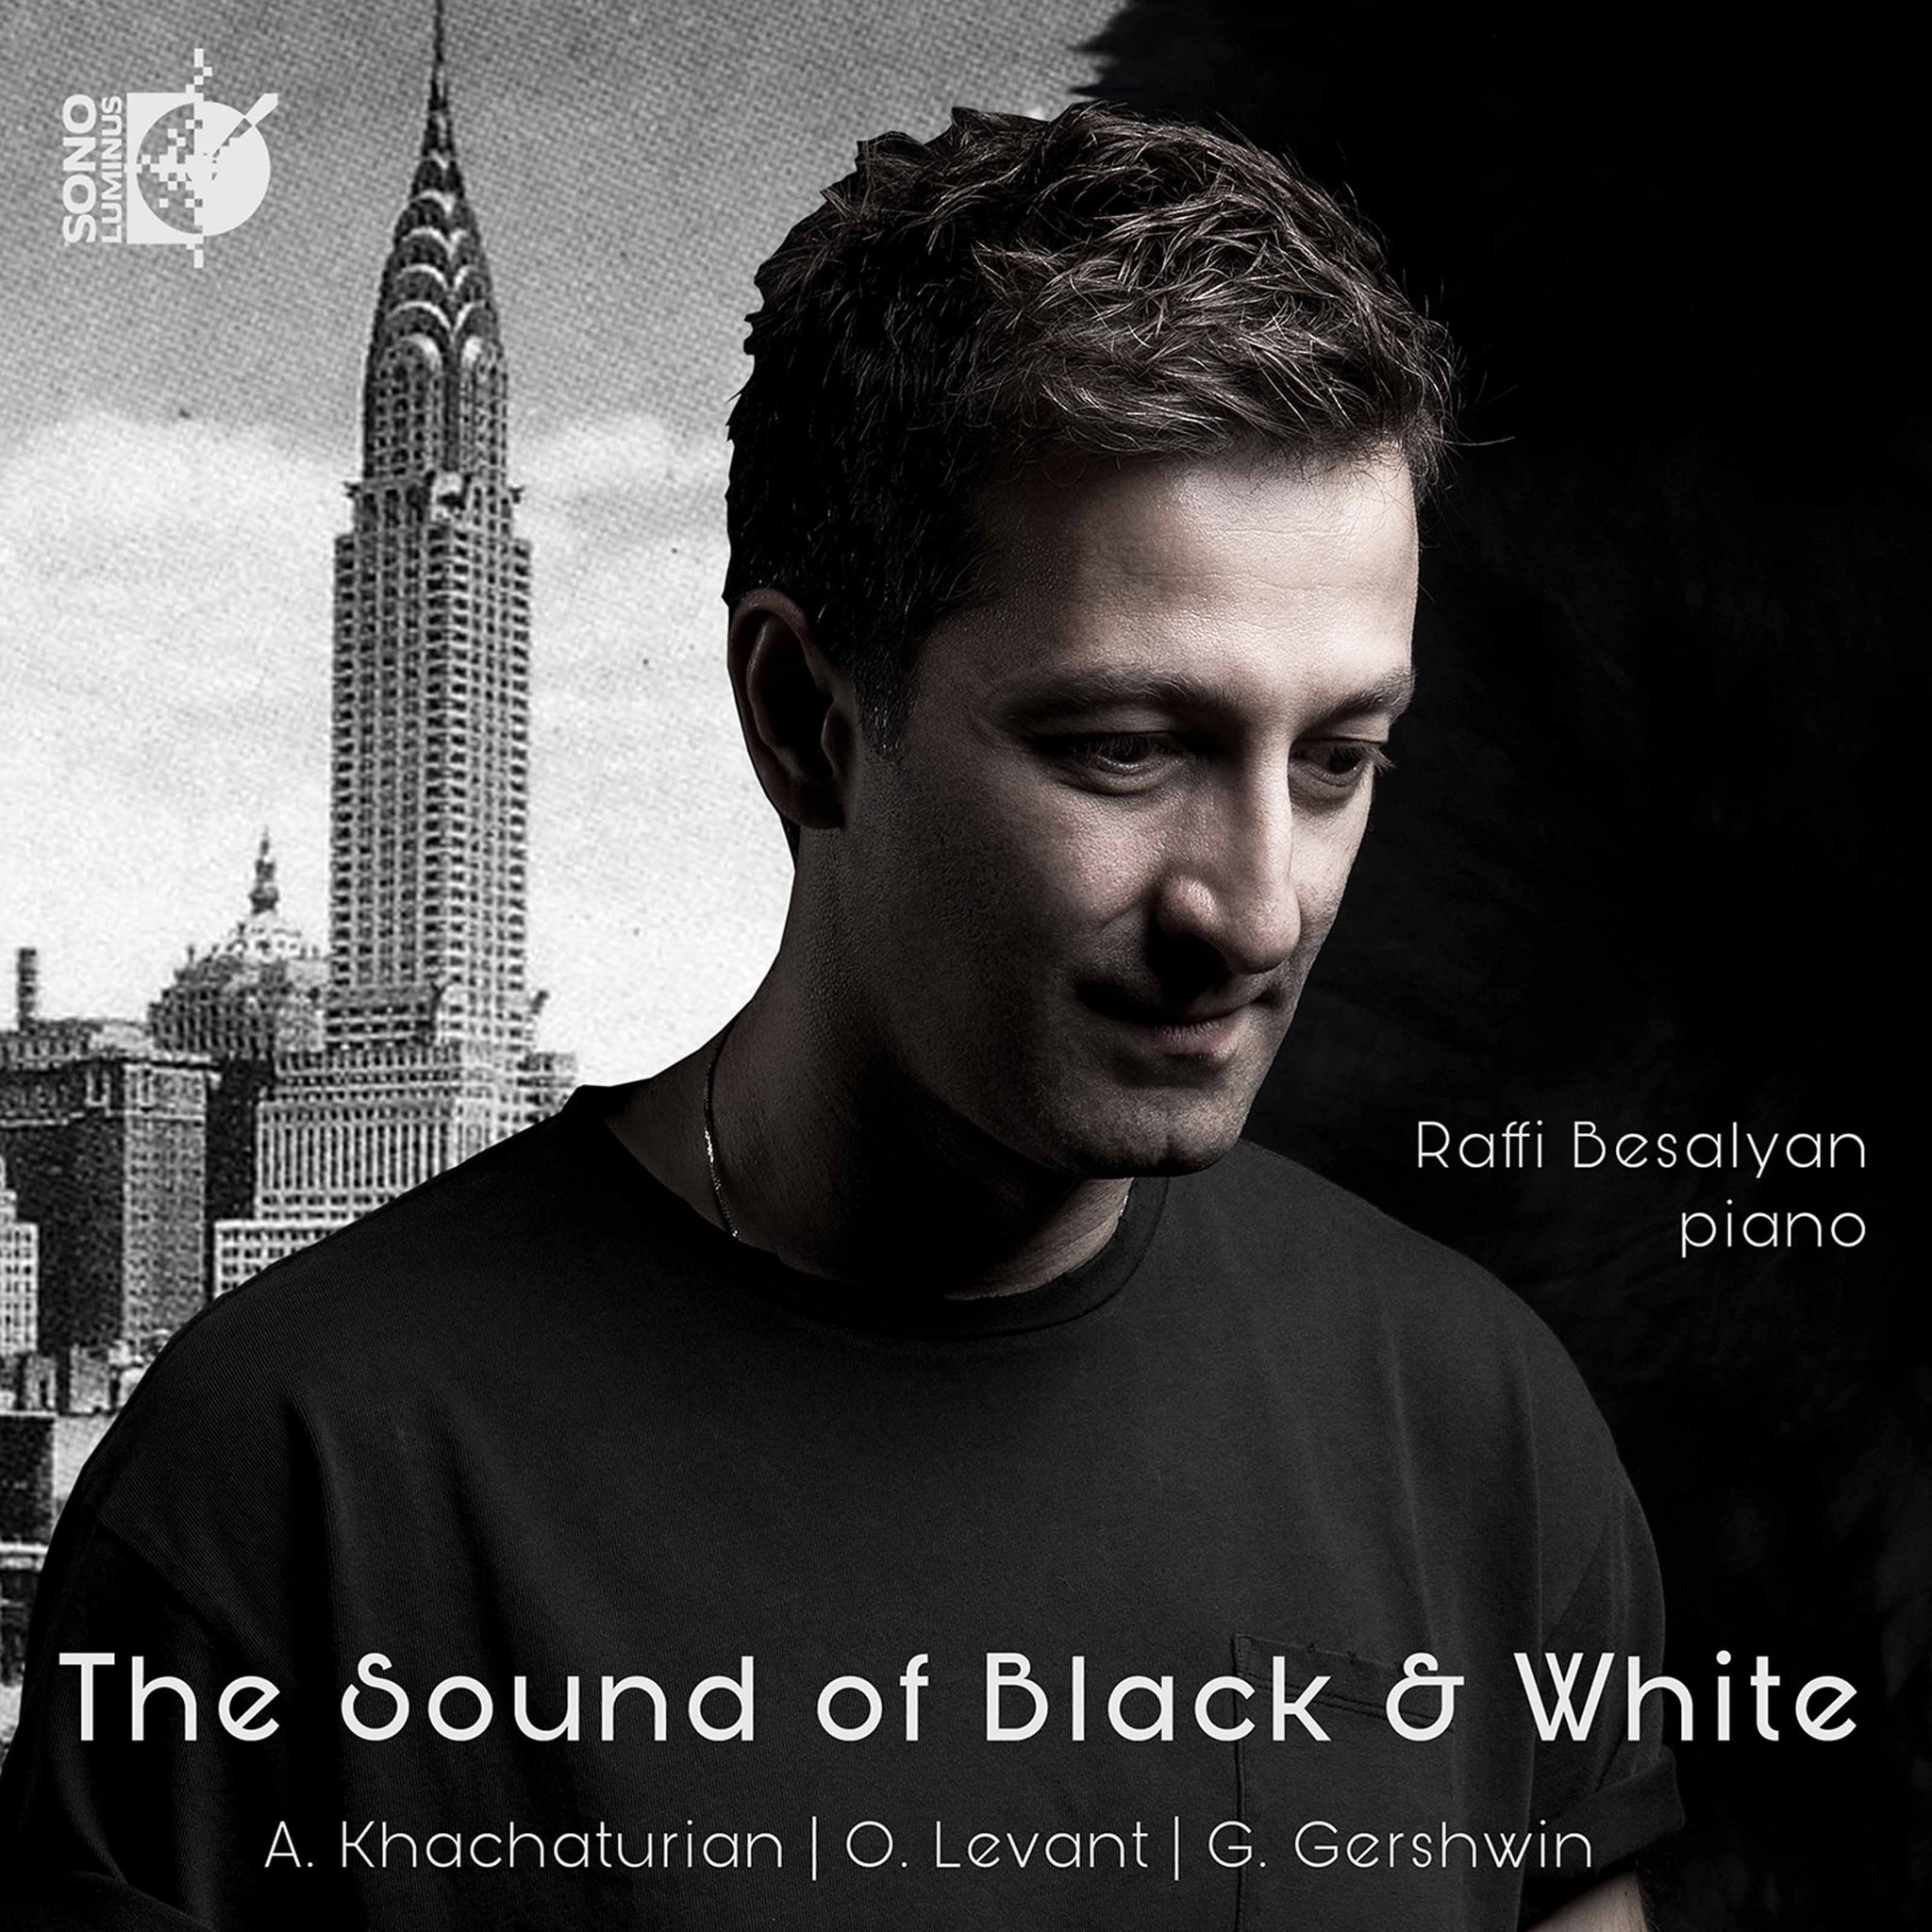 The Sound of Black and White / Raffi Besalyan